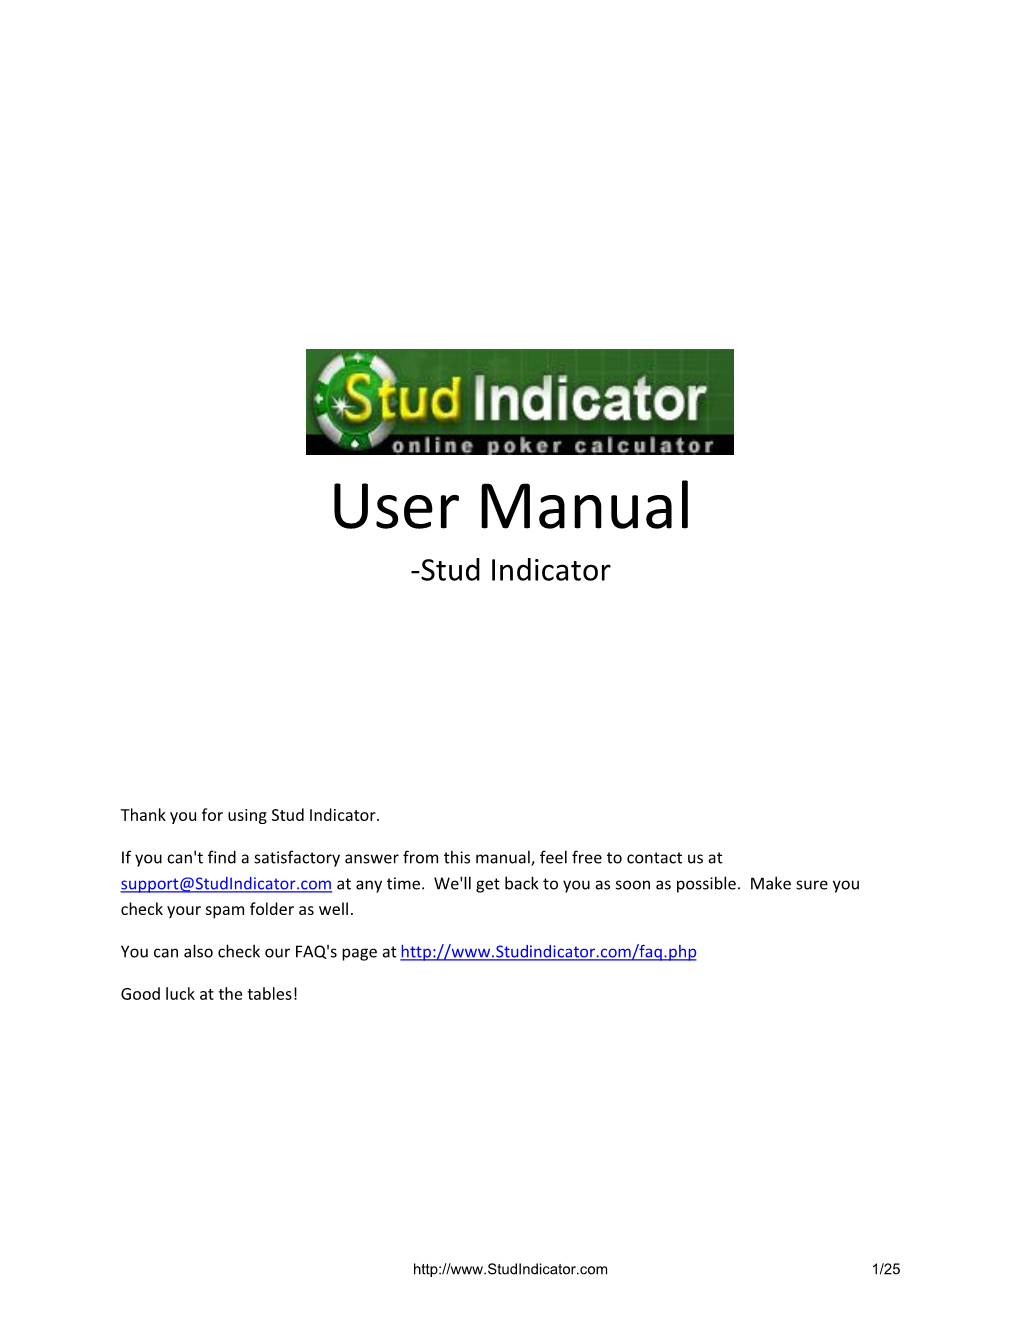 User Manual -Stud Indicator